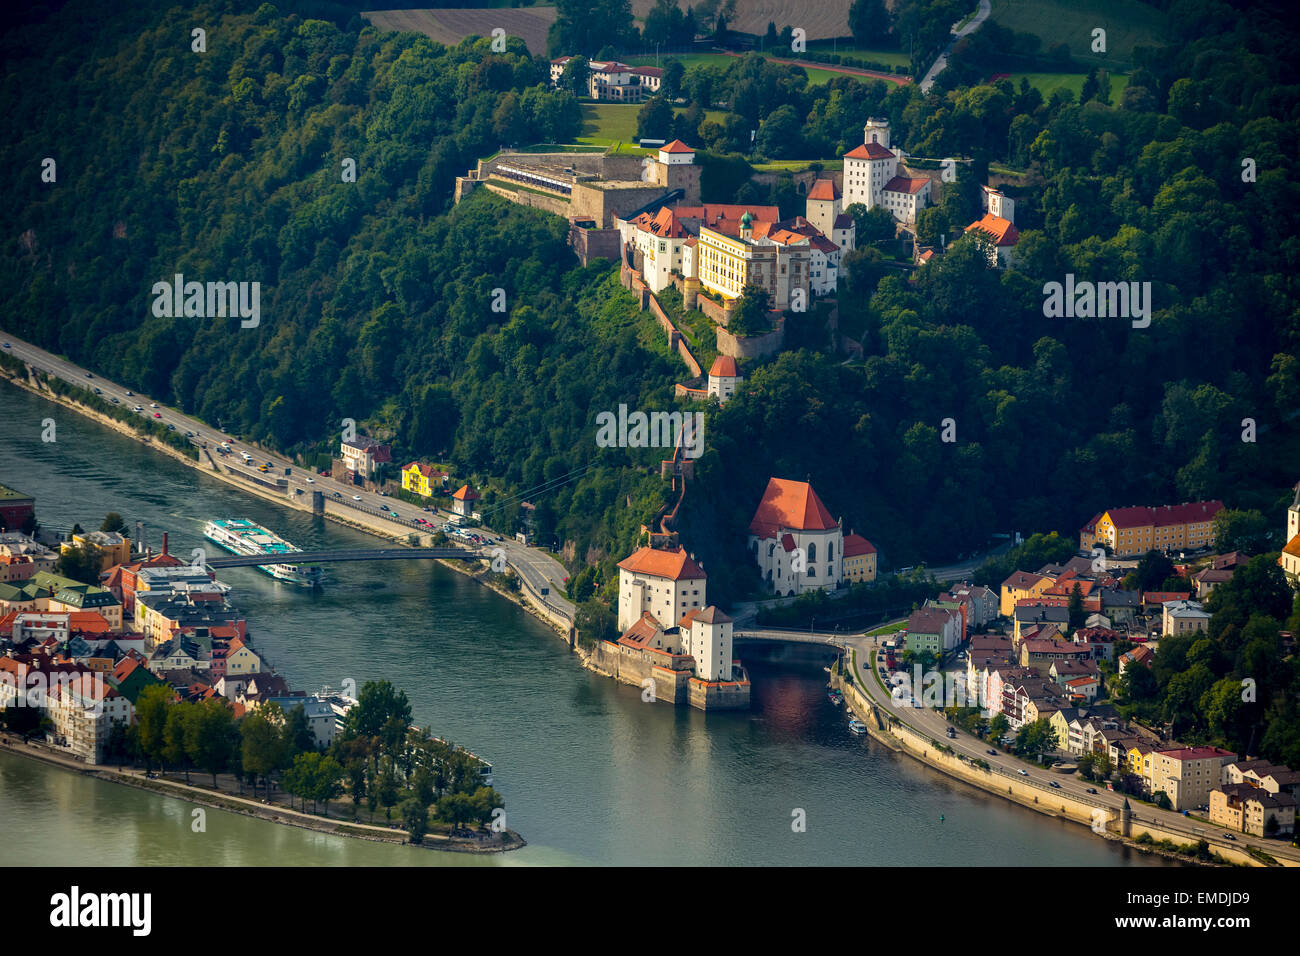 Veste Upper House, confluence of the three rivers Danube, Inn and Ilz, Passau, Lower Bavaria, Bavaria, Germany Stock Photo